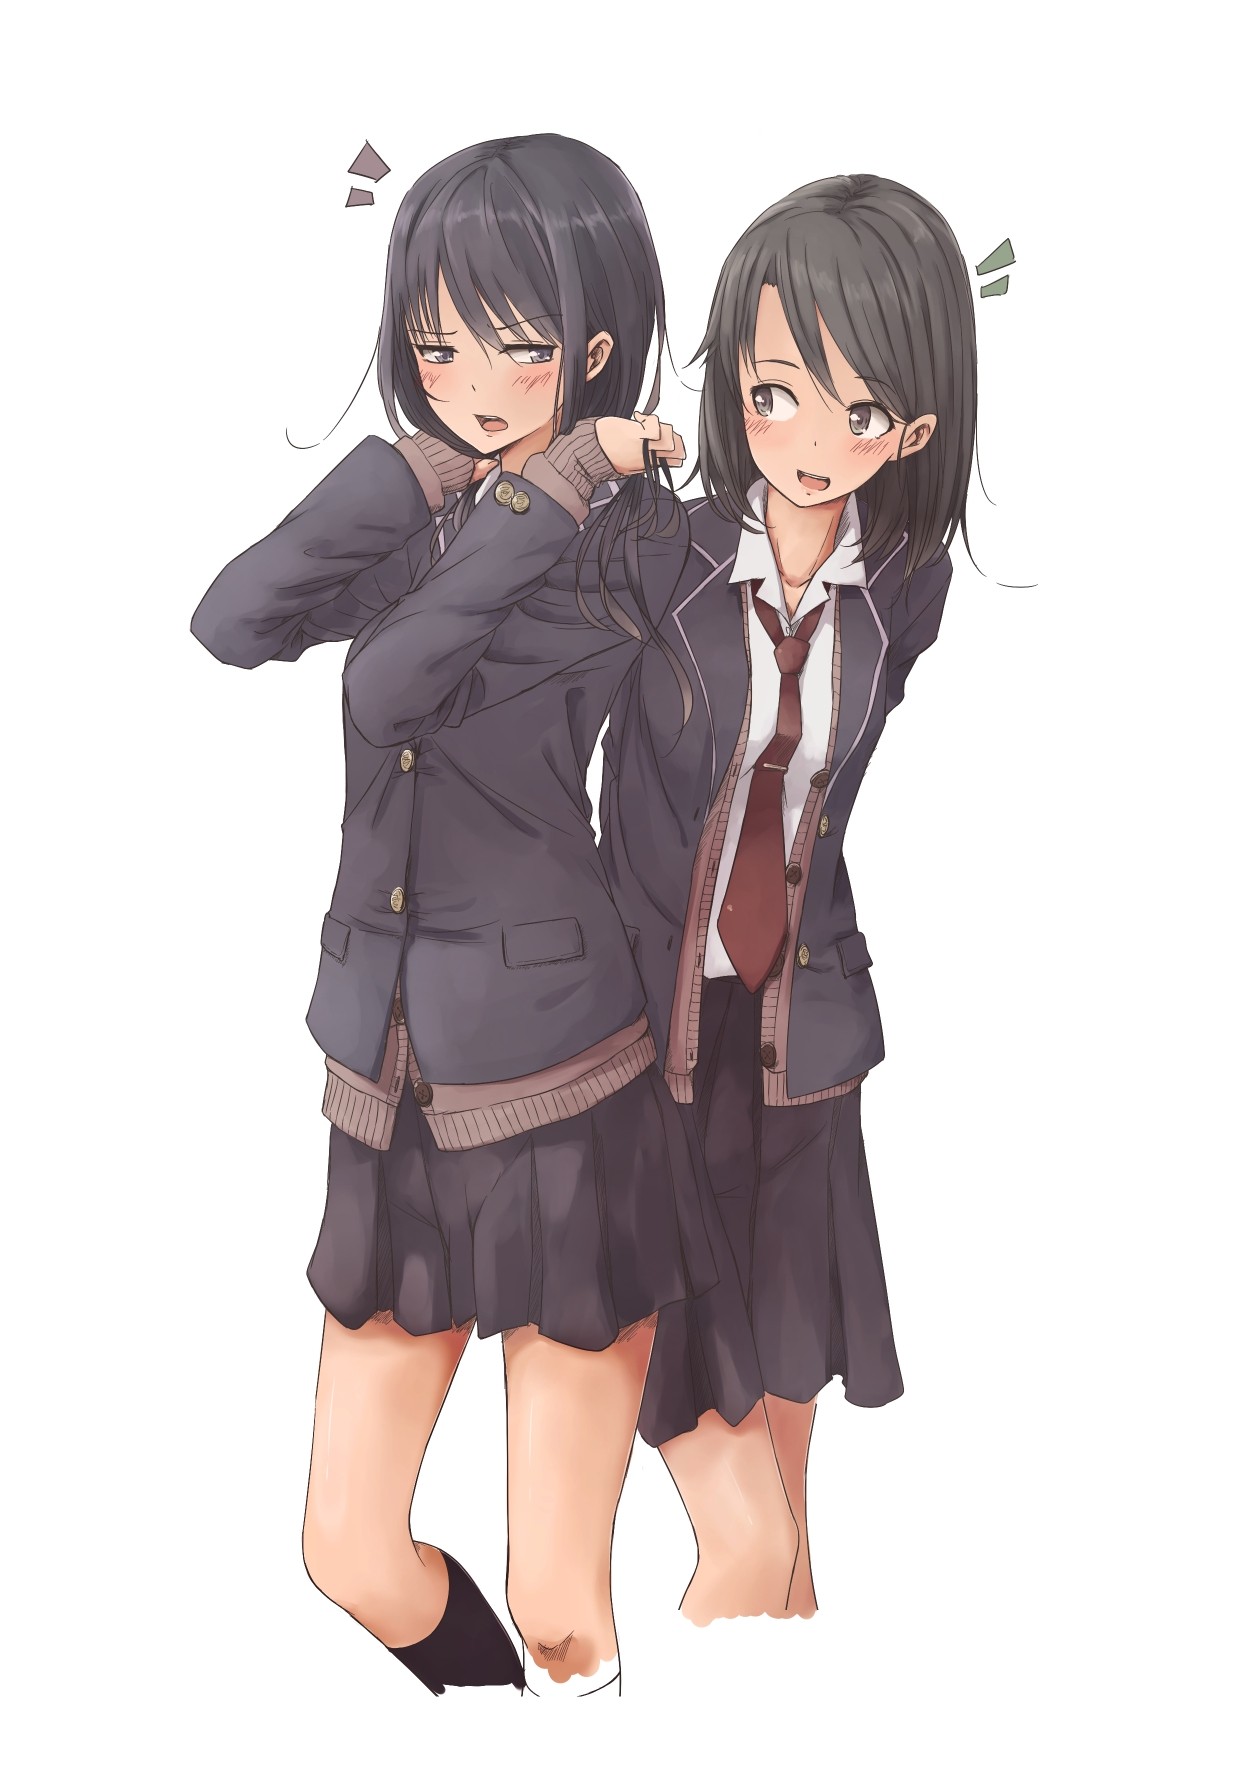 Anime 1254x1771 manga anime girls school uniform original characters two women skirt tie dark hair women white background simple background